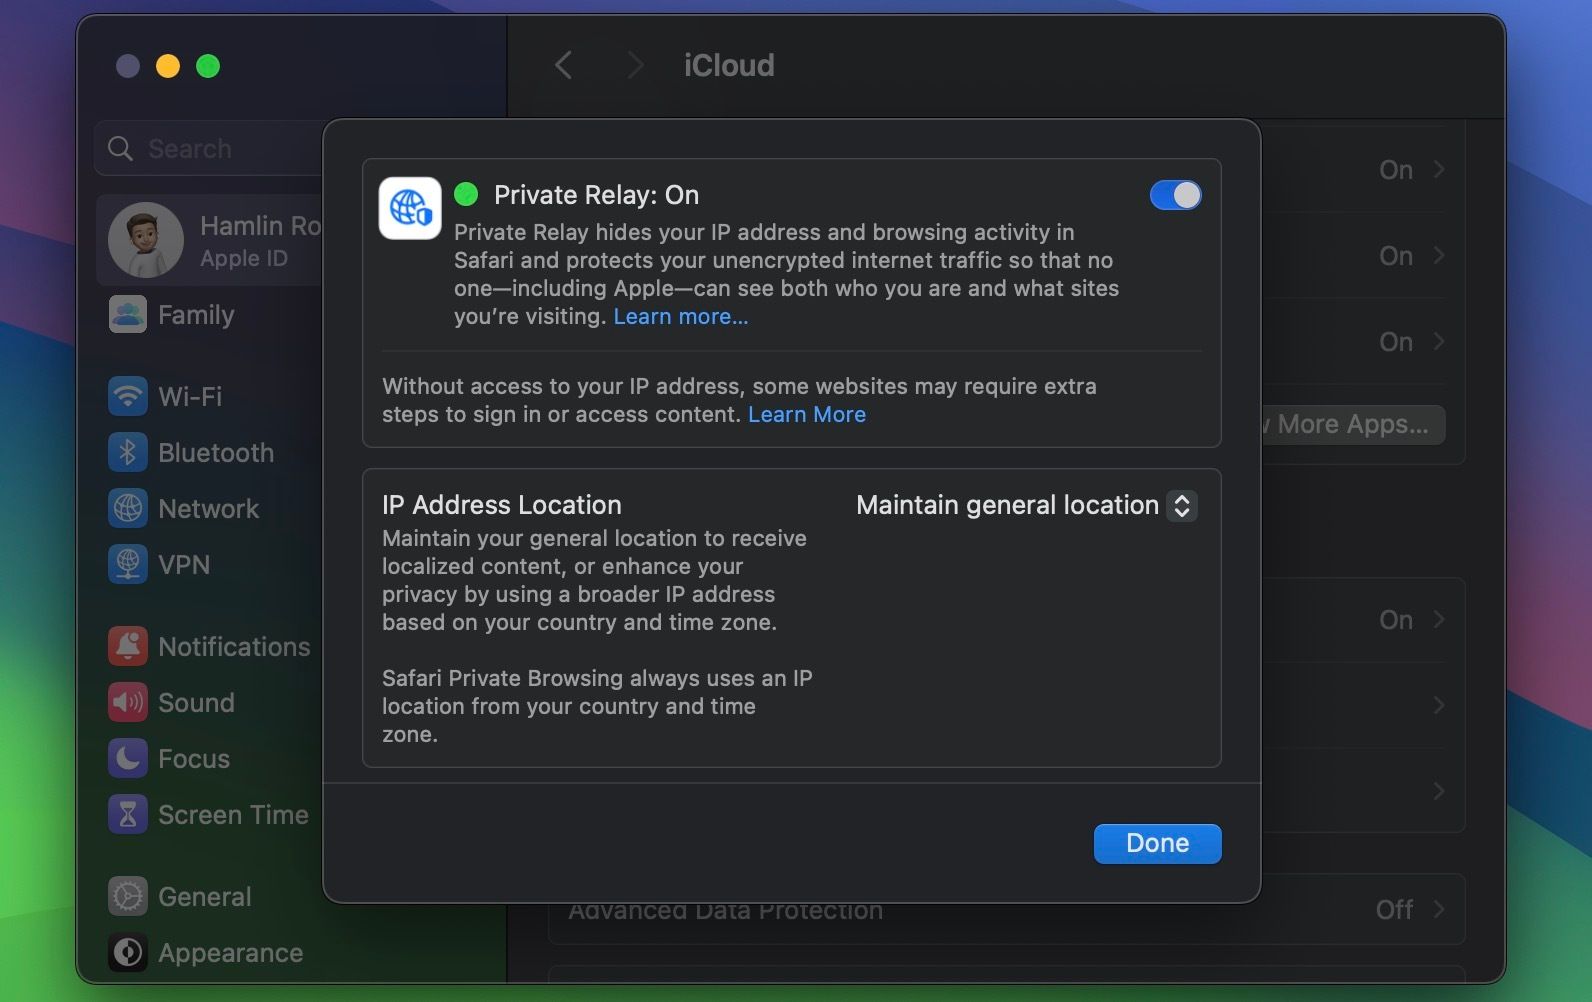 iCloud Private Relay menu in macOS